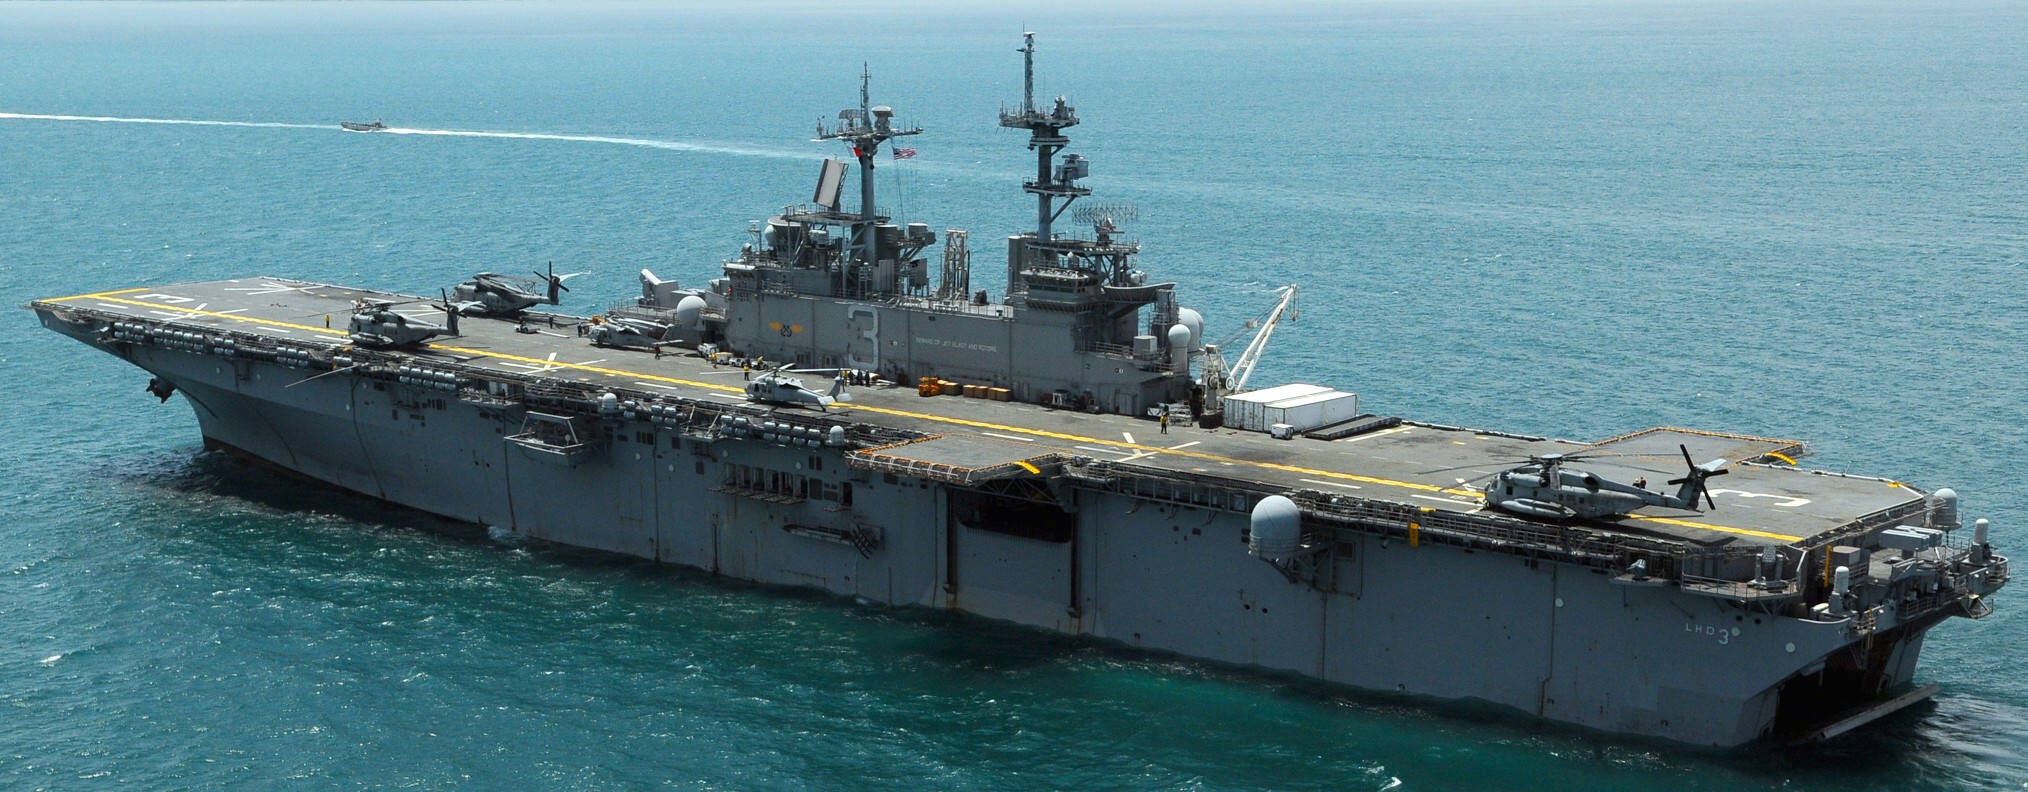 lhd-3 uss kearsarge wasp class amphibious assault ship landing dock disaster relief haiti hurricane 68